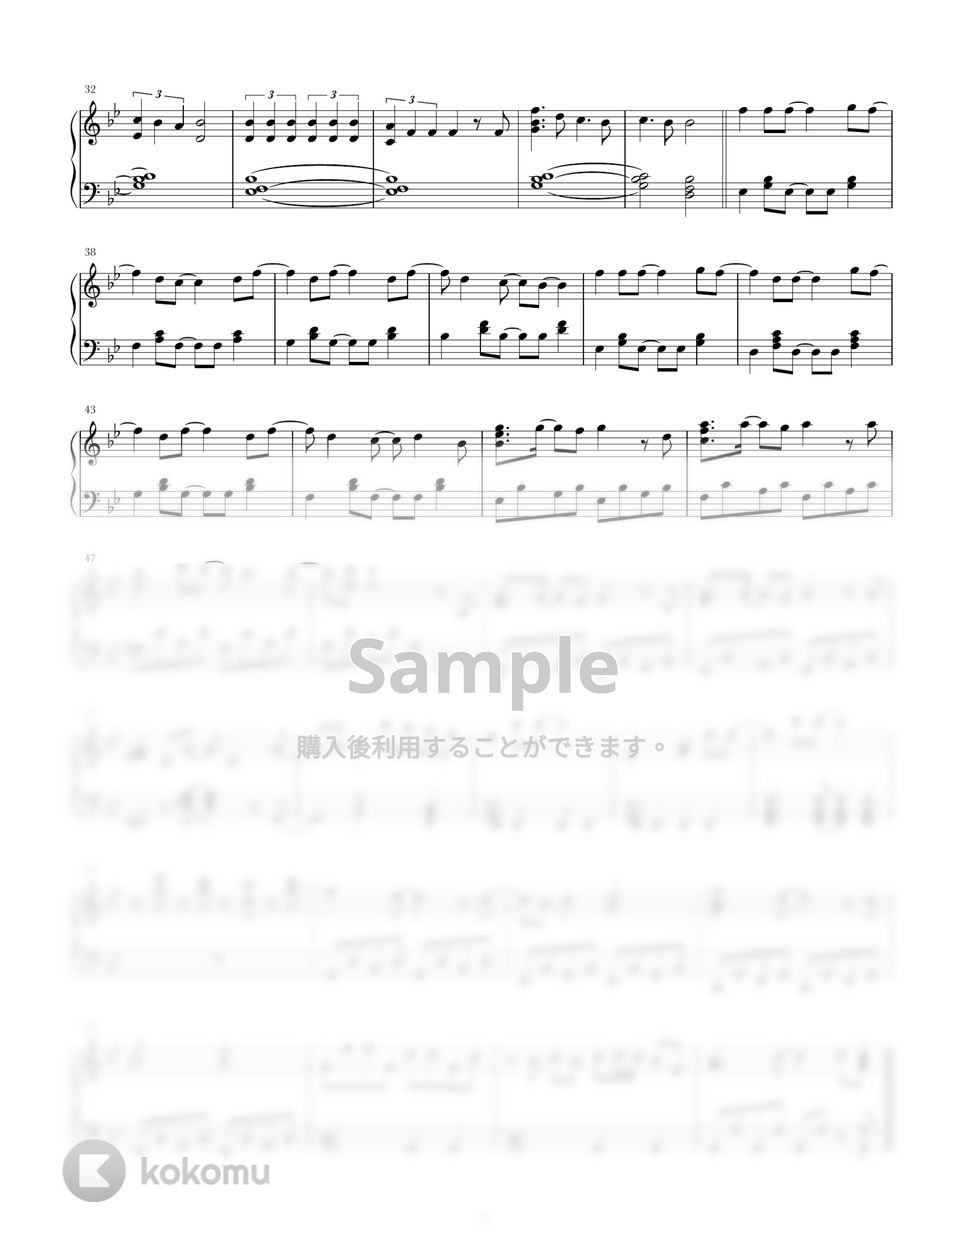 MAN WTH A MISSION×milet - 絆ノ奇跡 (アニメ/ピアノ/ソロ/きめつ) by harupi